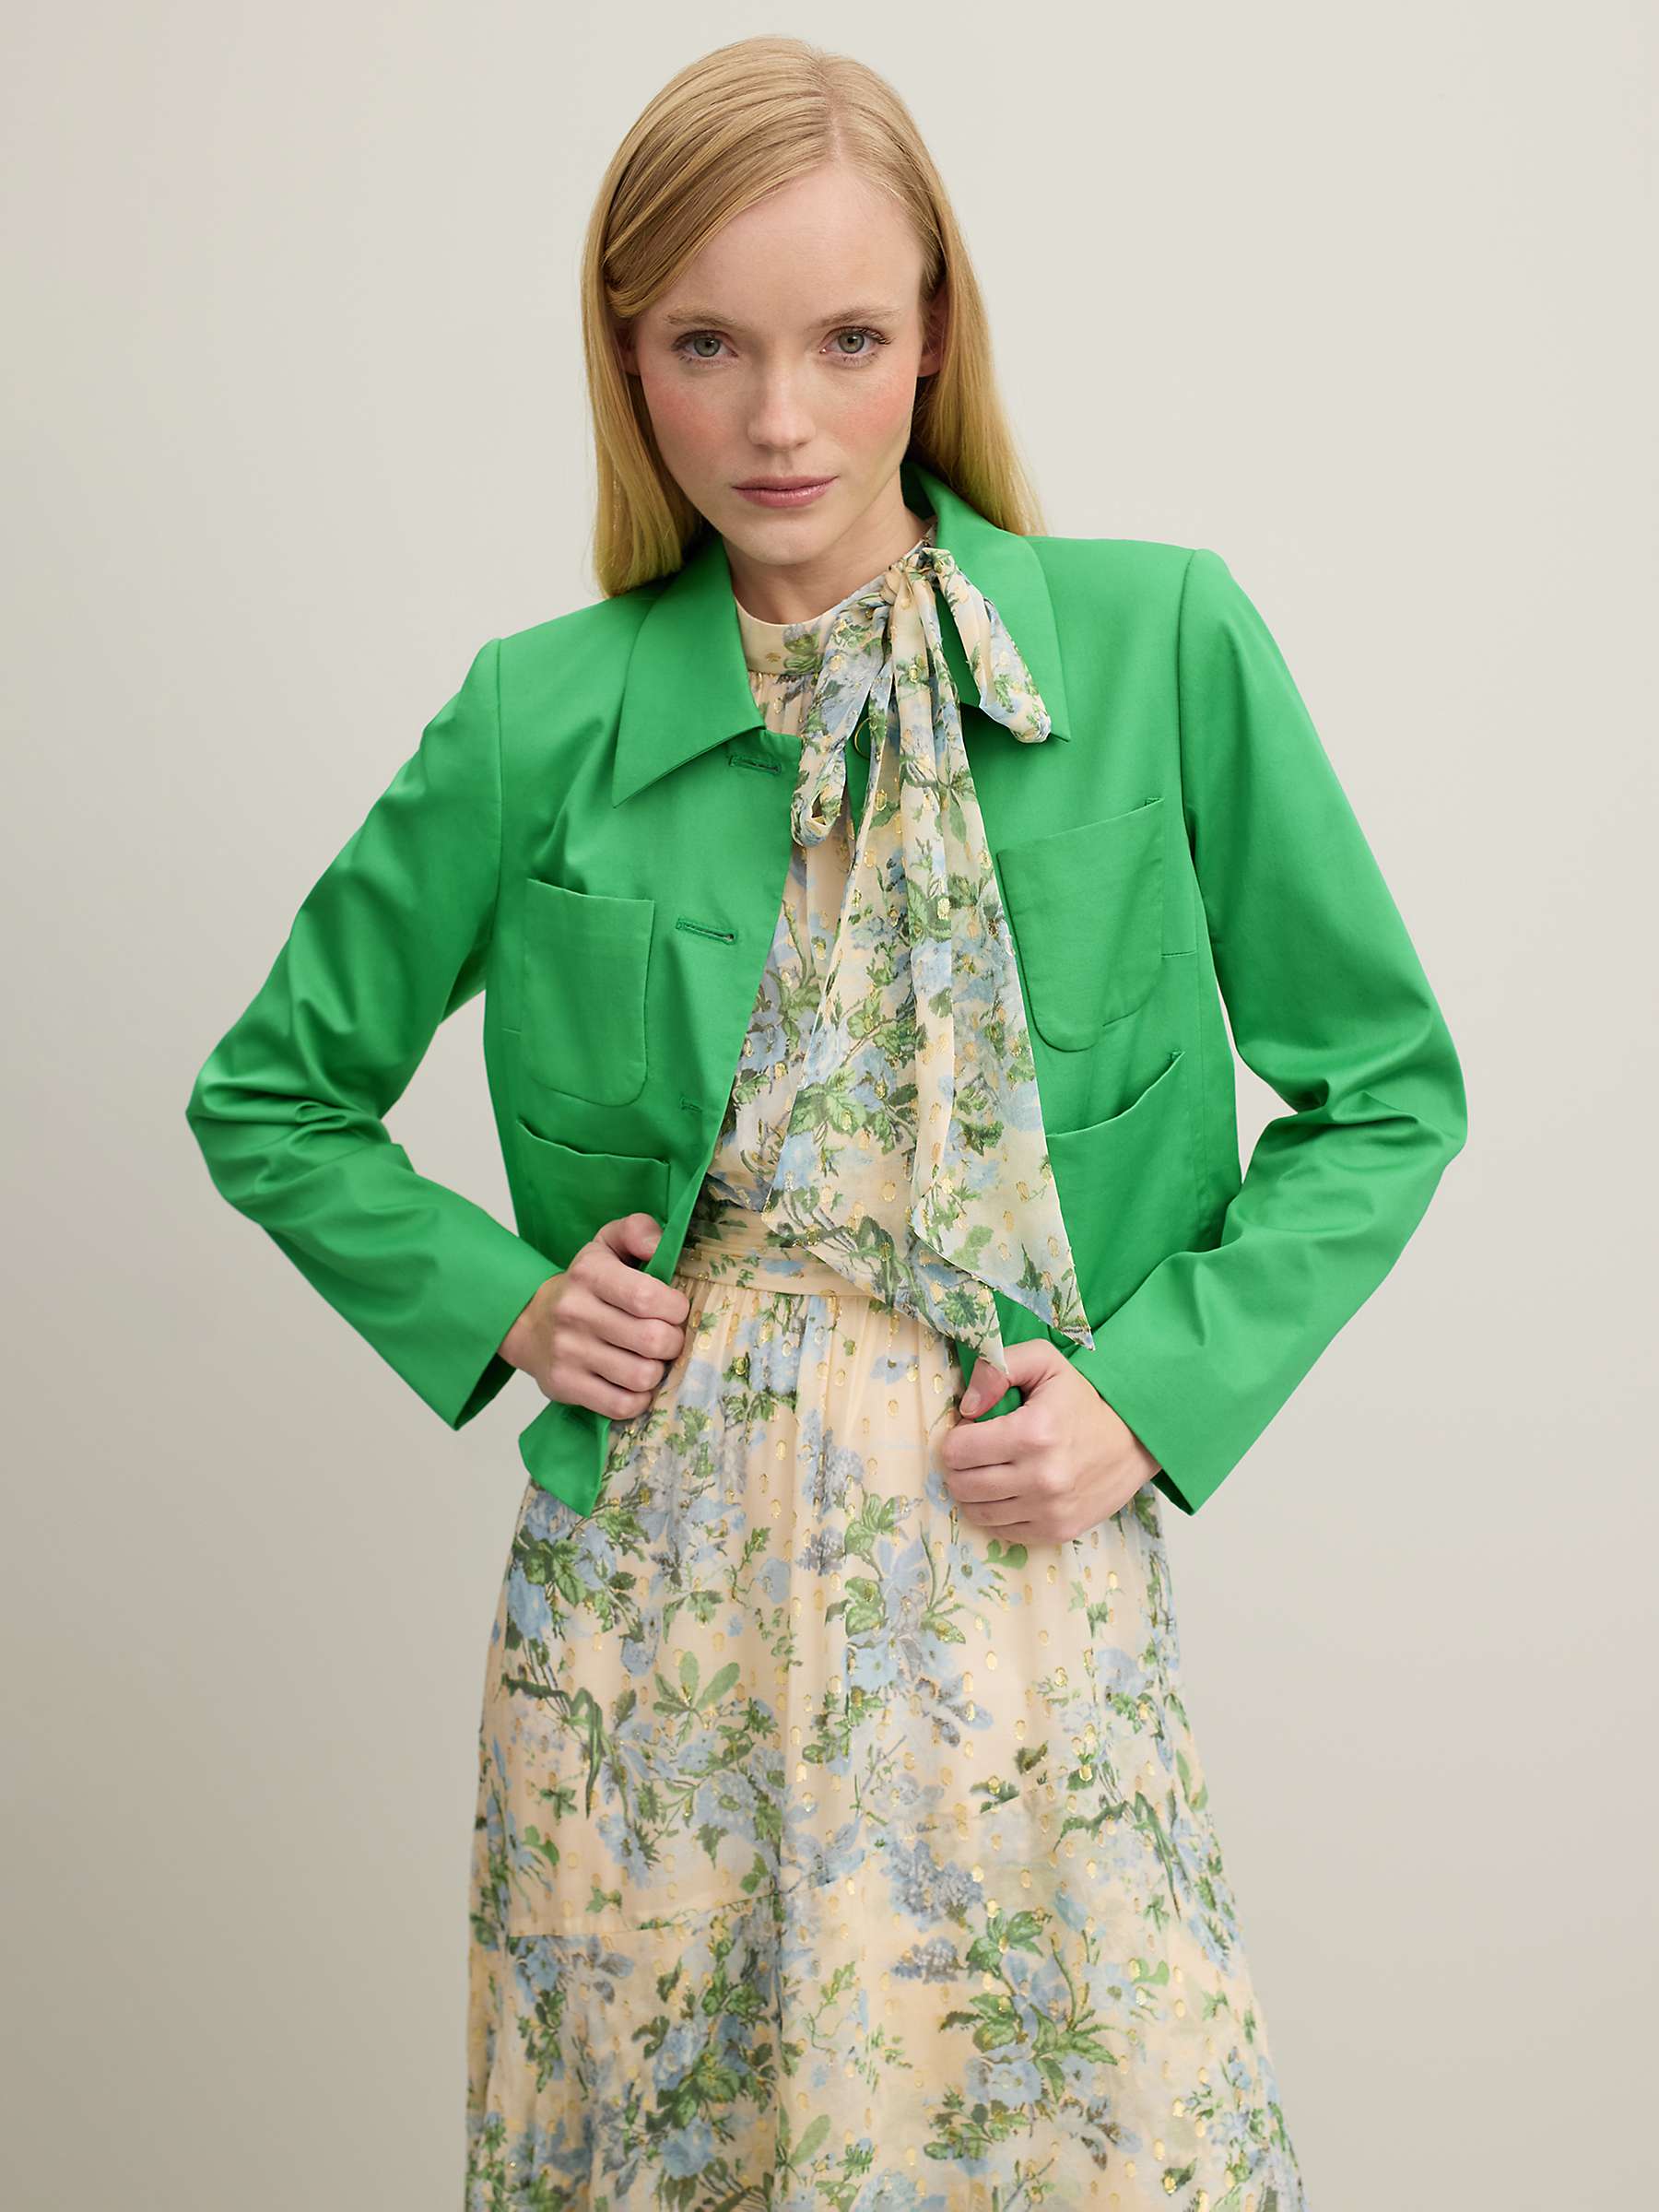 Buy L.K.Bennett Royal Ascot Charlotte Cotton Blend Jacket, Green Online at johnlewis.com